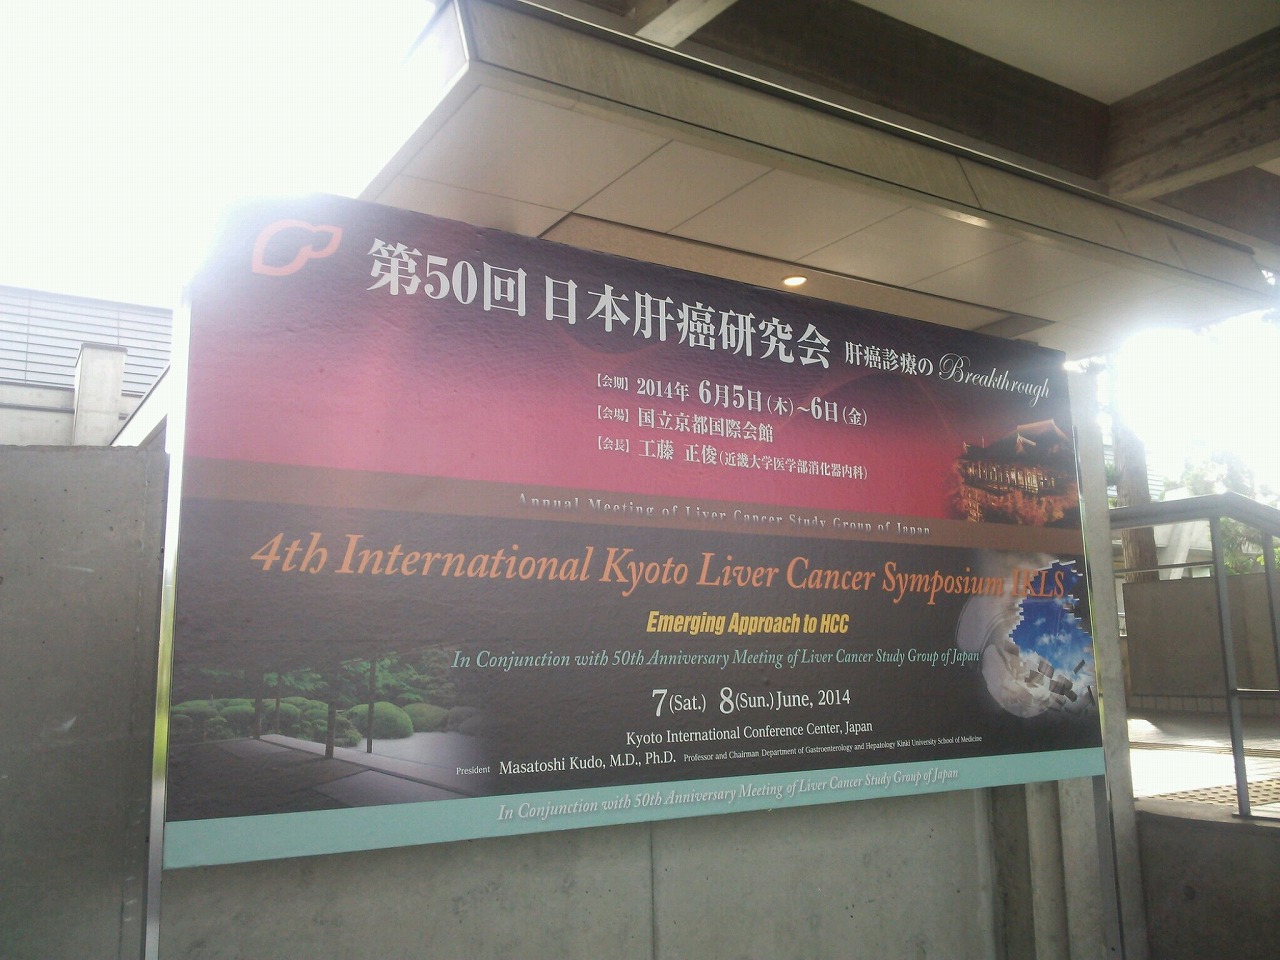 日本肝癌研究会ＩＫＬＳ(4th International Kyoto Liver Cancer Symposium)